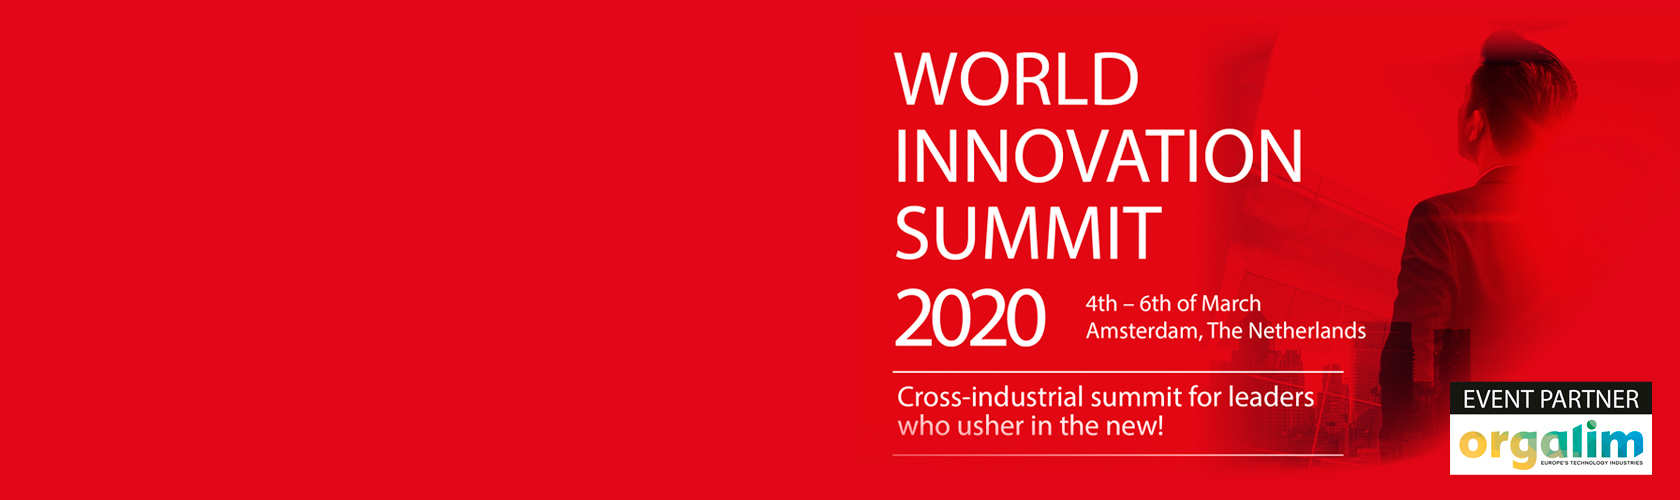 World Innovation Summit